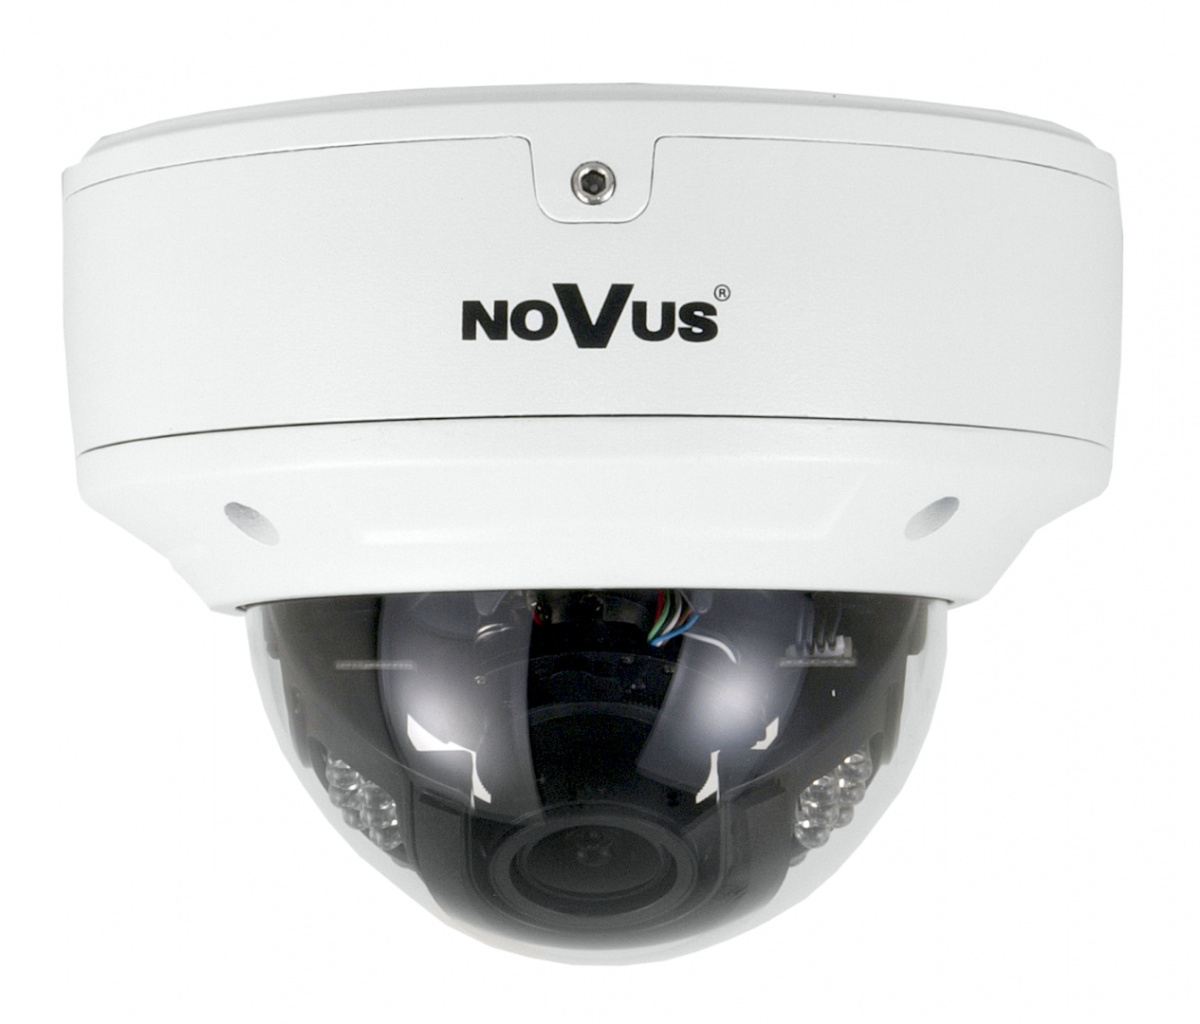 Kamera IP wandaloodporna z obiektywem motor-zoom NVIP-8V-6402M/F